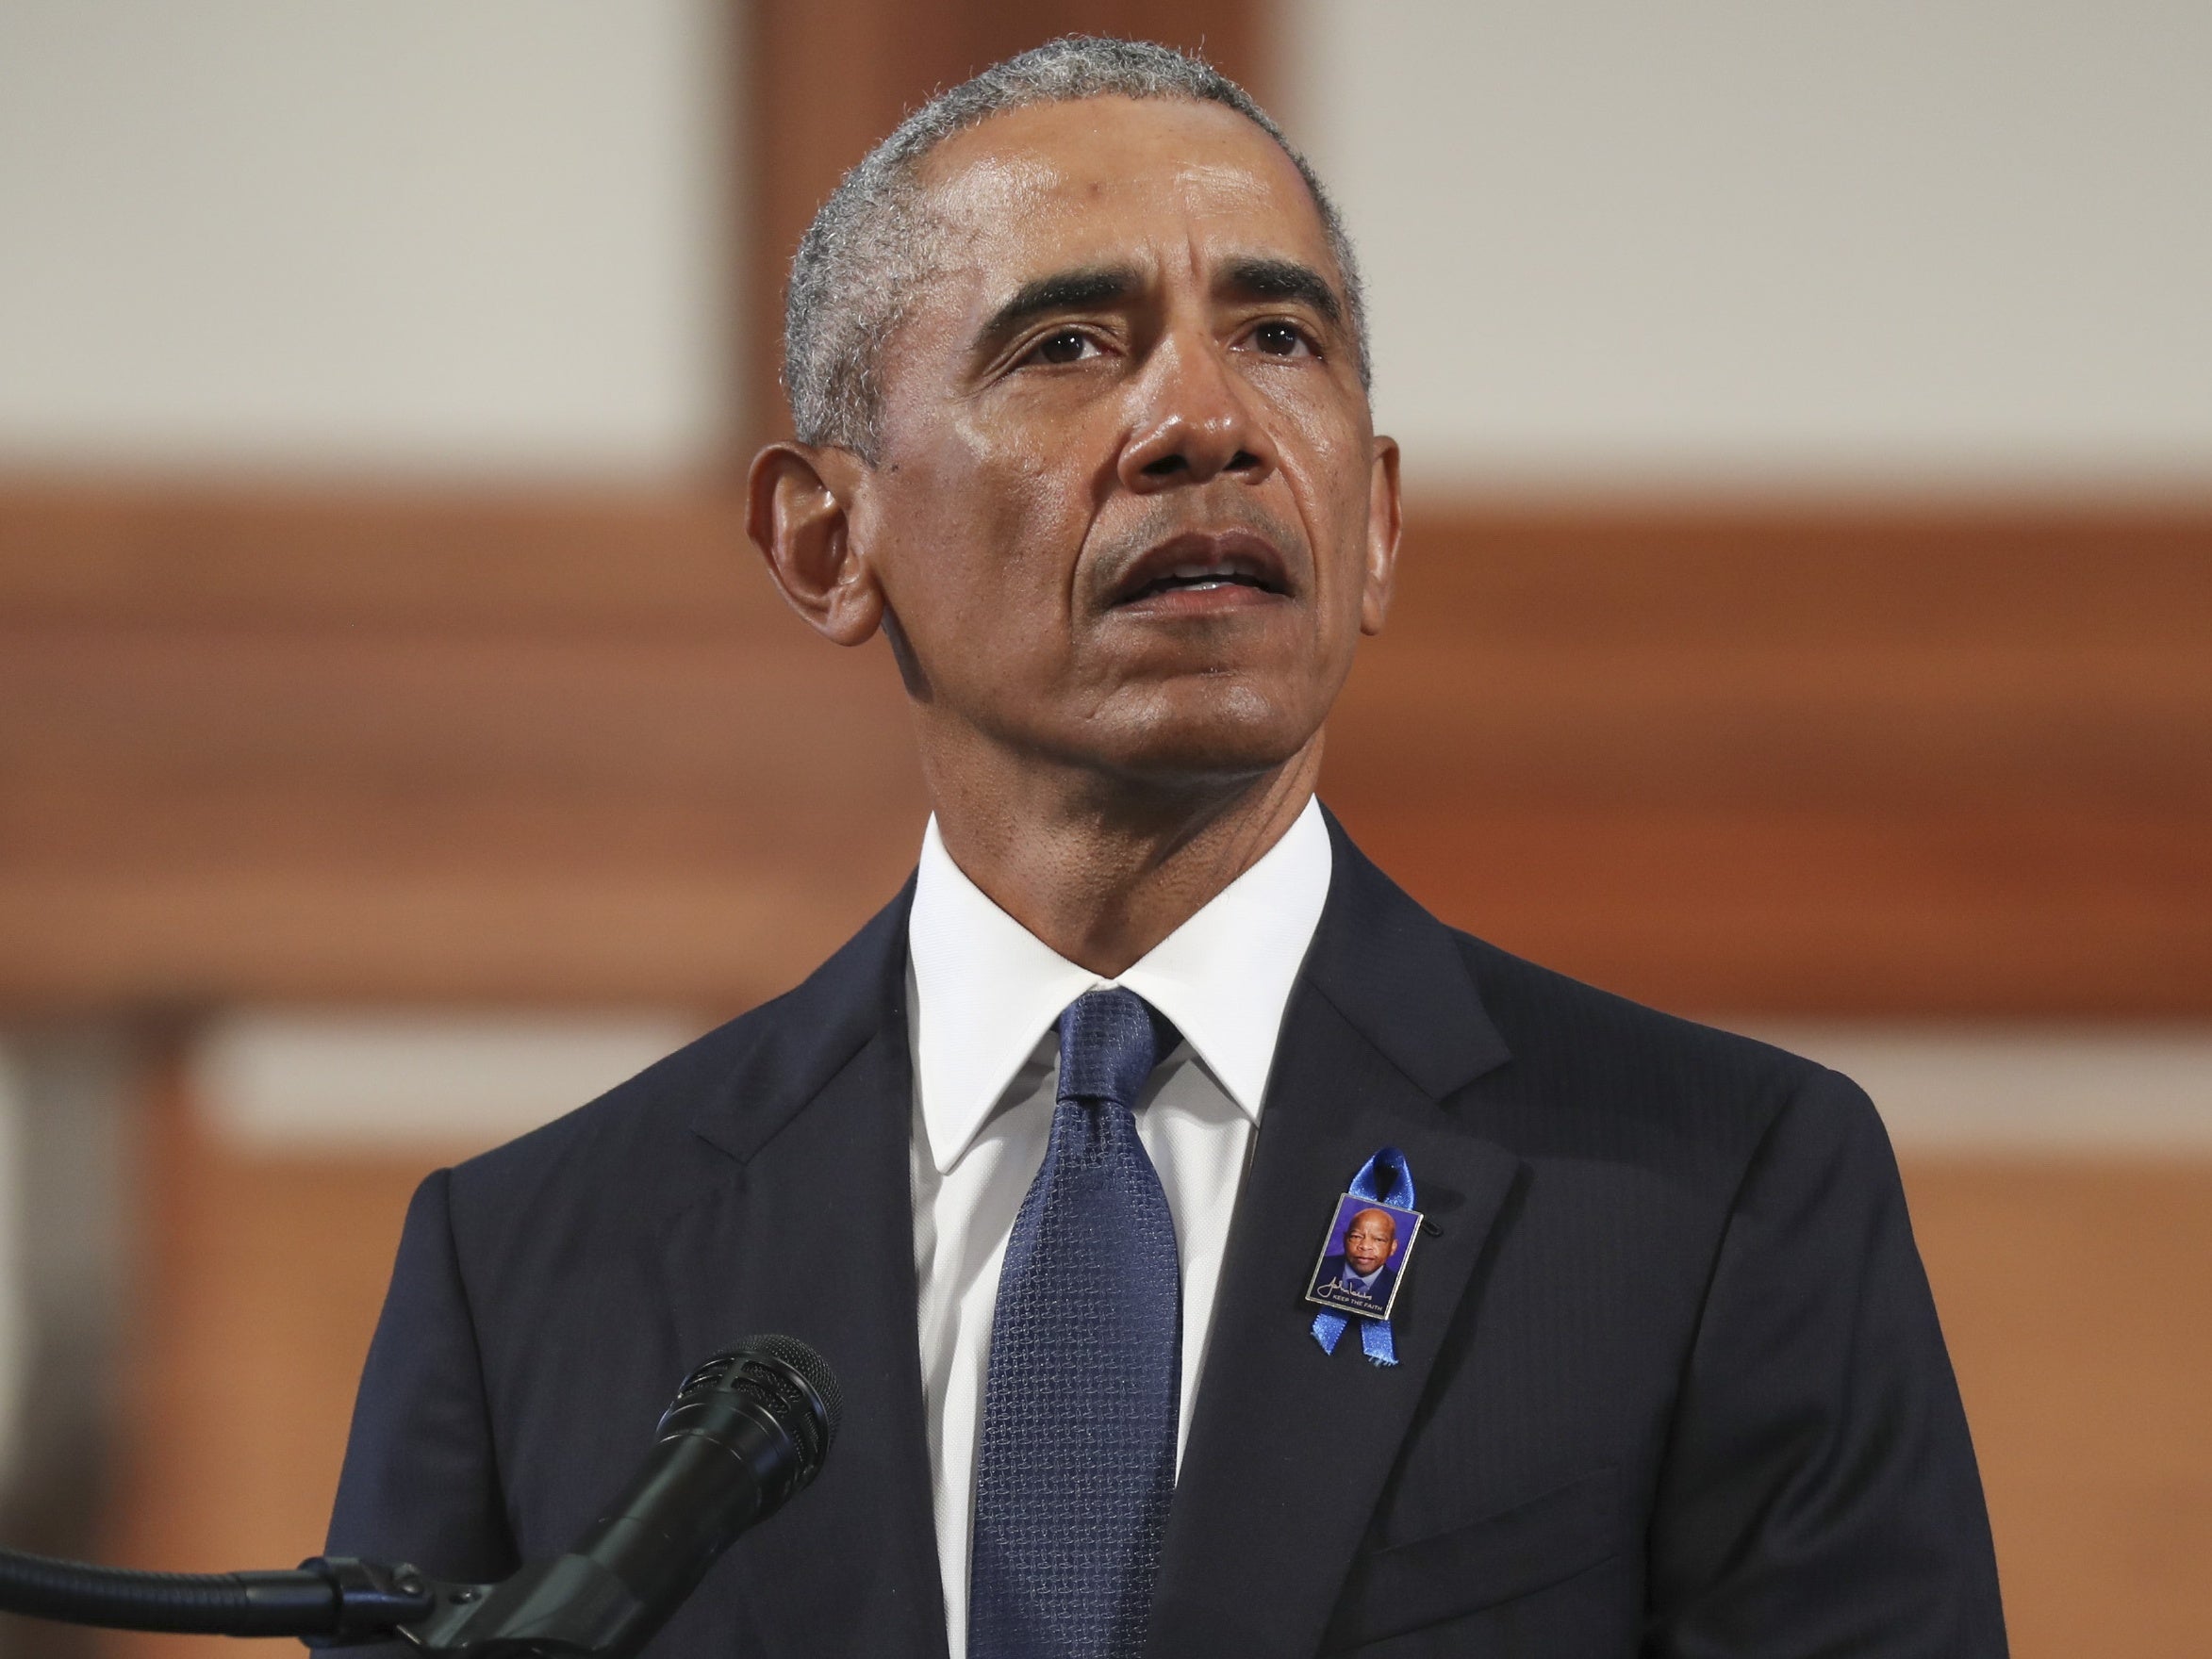 Barack Obama Says He Broke His Peer's Nose For Calling Him A Racial Slur